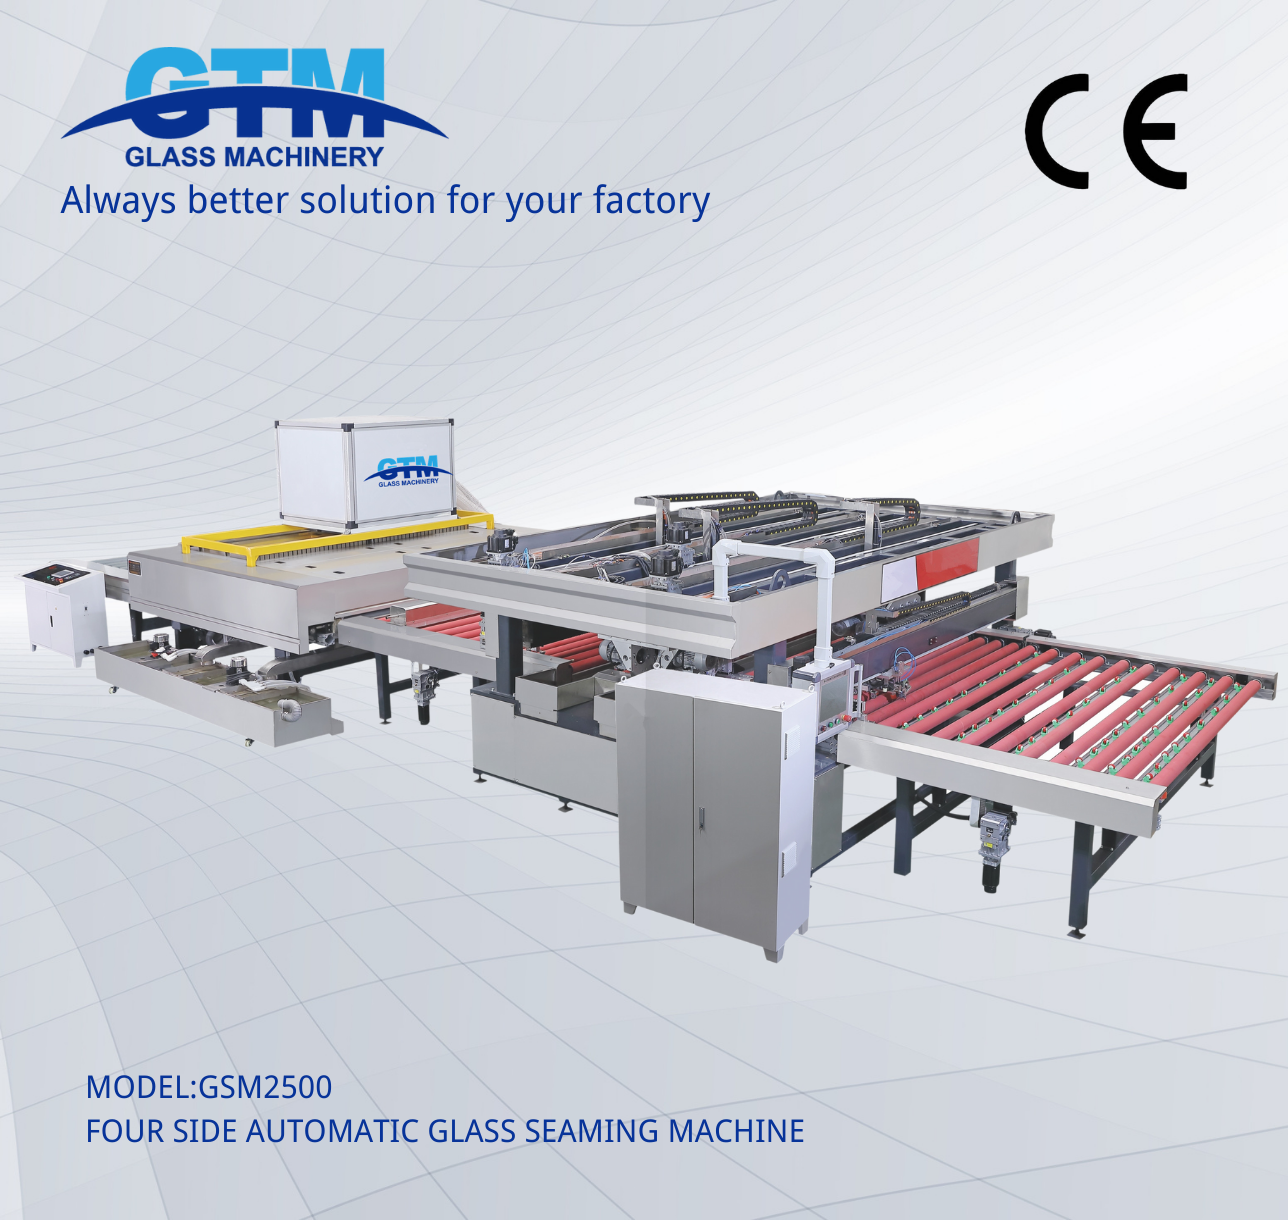 GFM2500 Four side automatic glass seaming machine